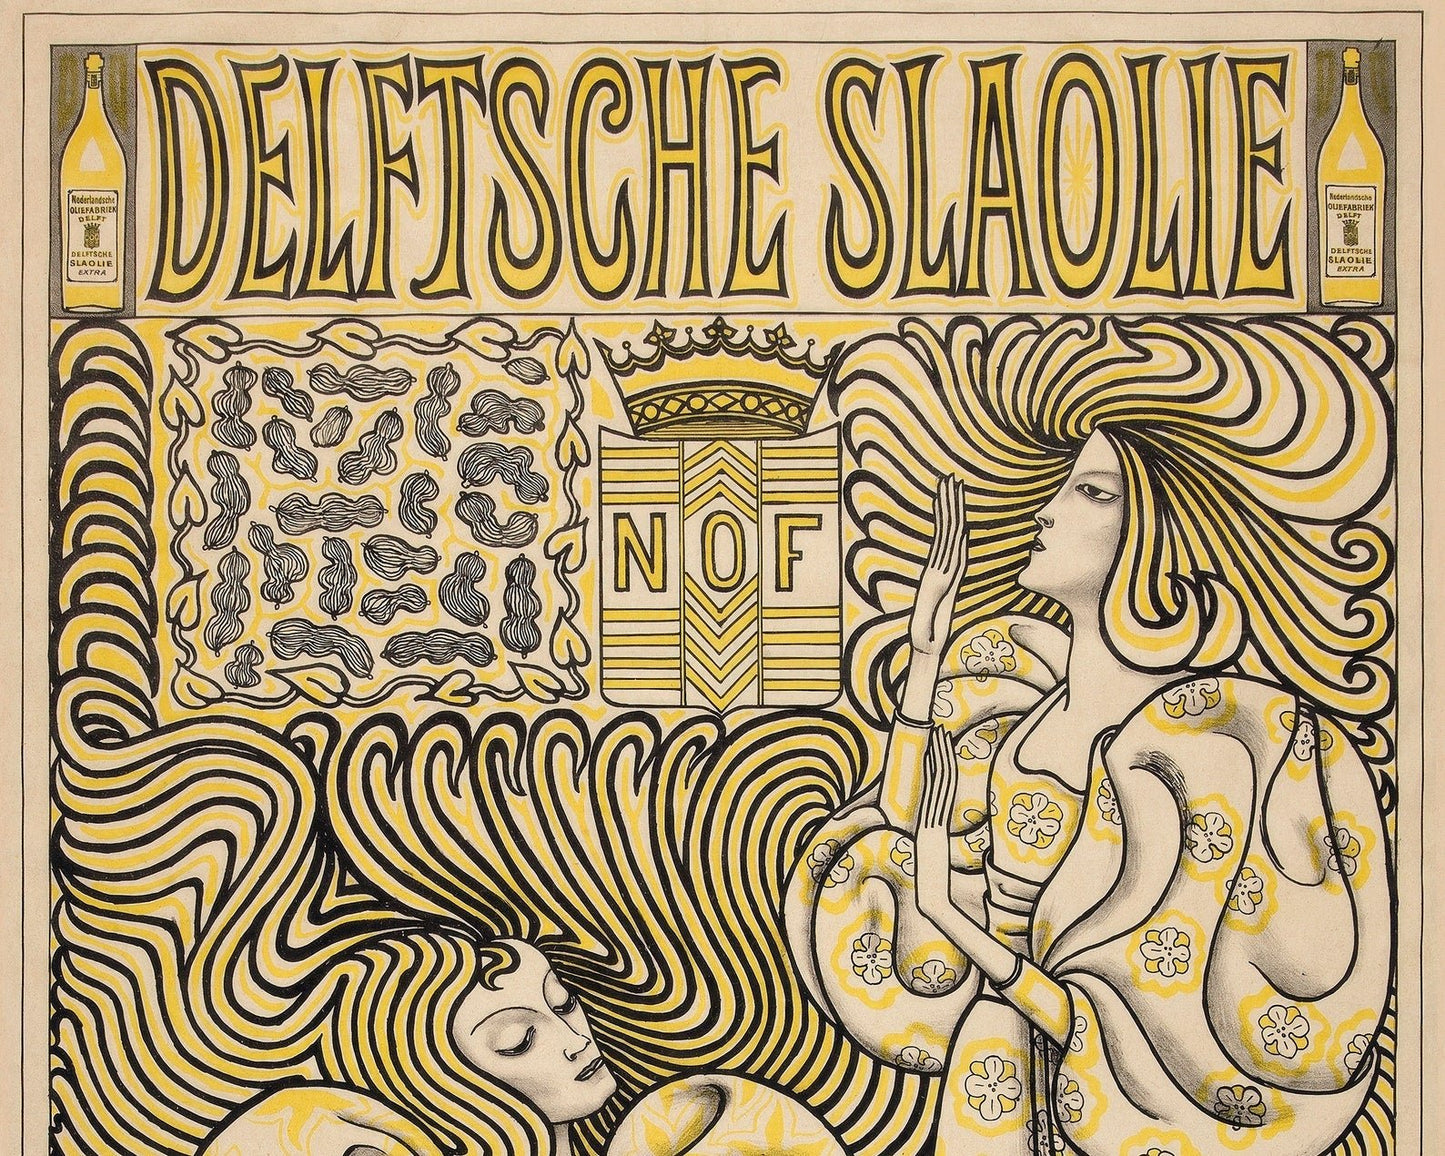 Jan Toorop "Delftsche Slaolie" (c.1894) - Mabon Gallery